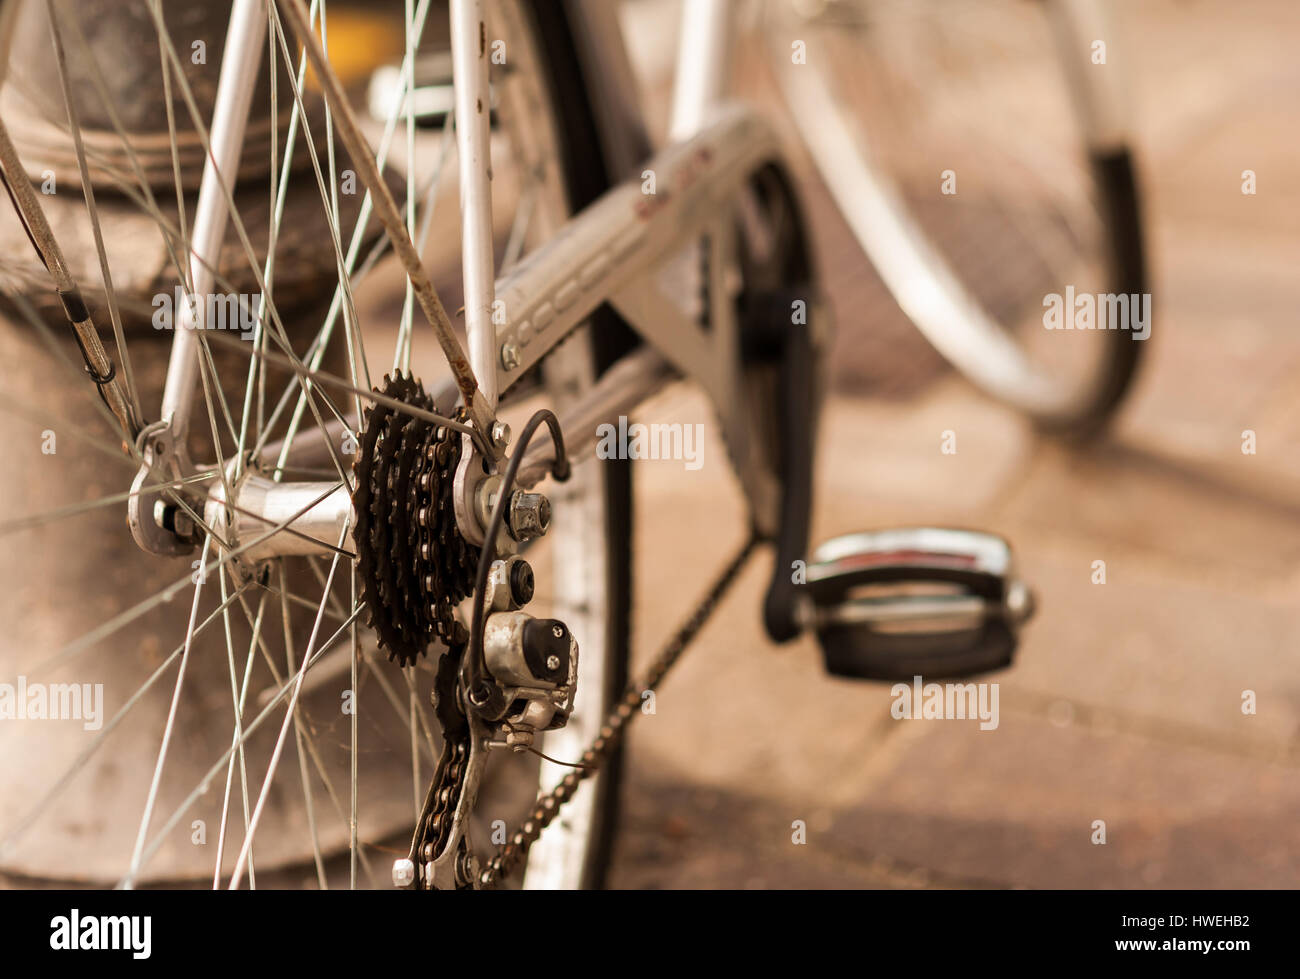 Fahrrad. Selektiven Fokus auf Kette und Getriebe. Hinteren Getriebe und Fahrrad-Kette. Stockfoto